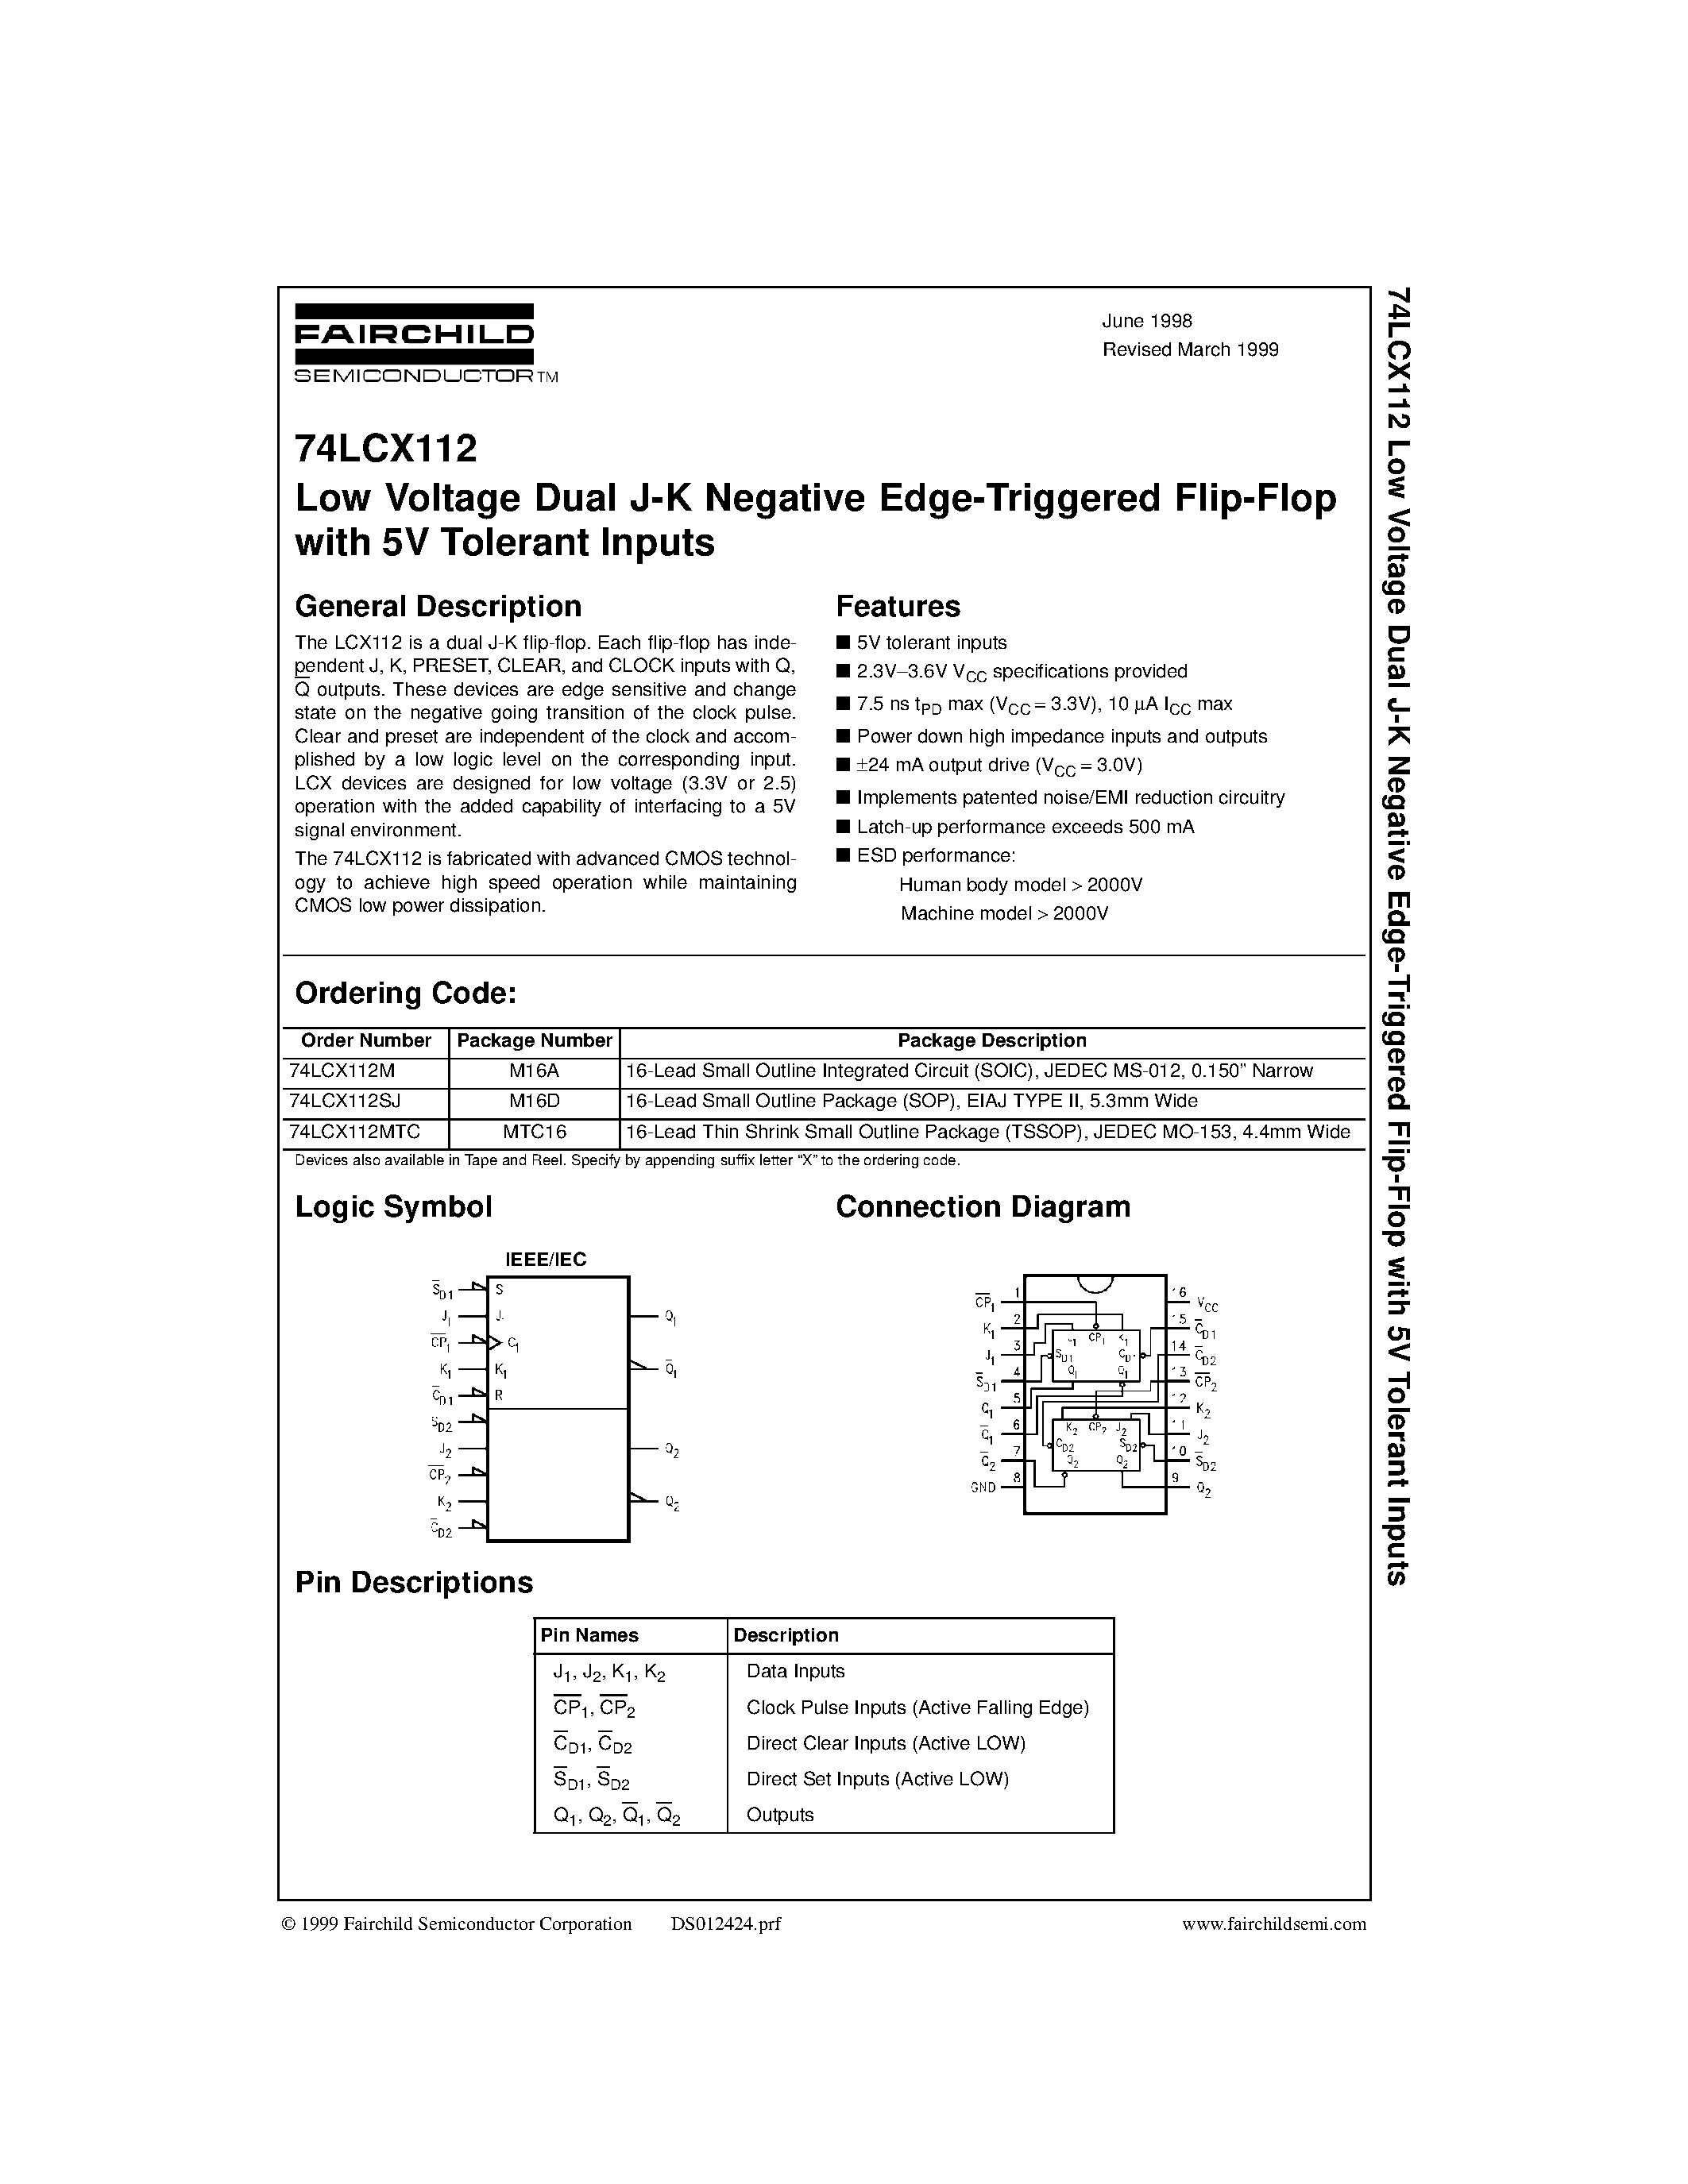 Даташит 74LCX112MTC - Low Voltage Dual J-K Negative Edge-Triggered Flip-Flop with 5V Tolerant Inputs страница 1